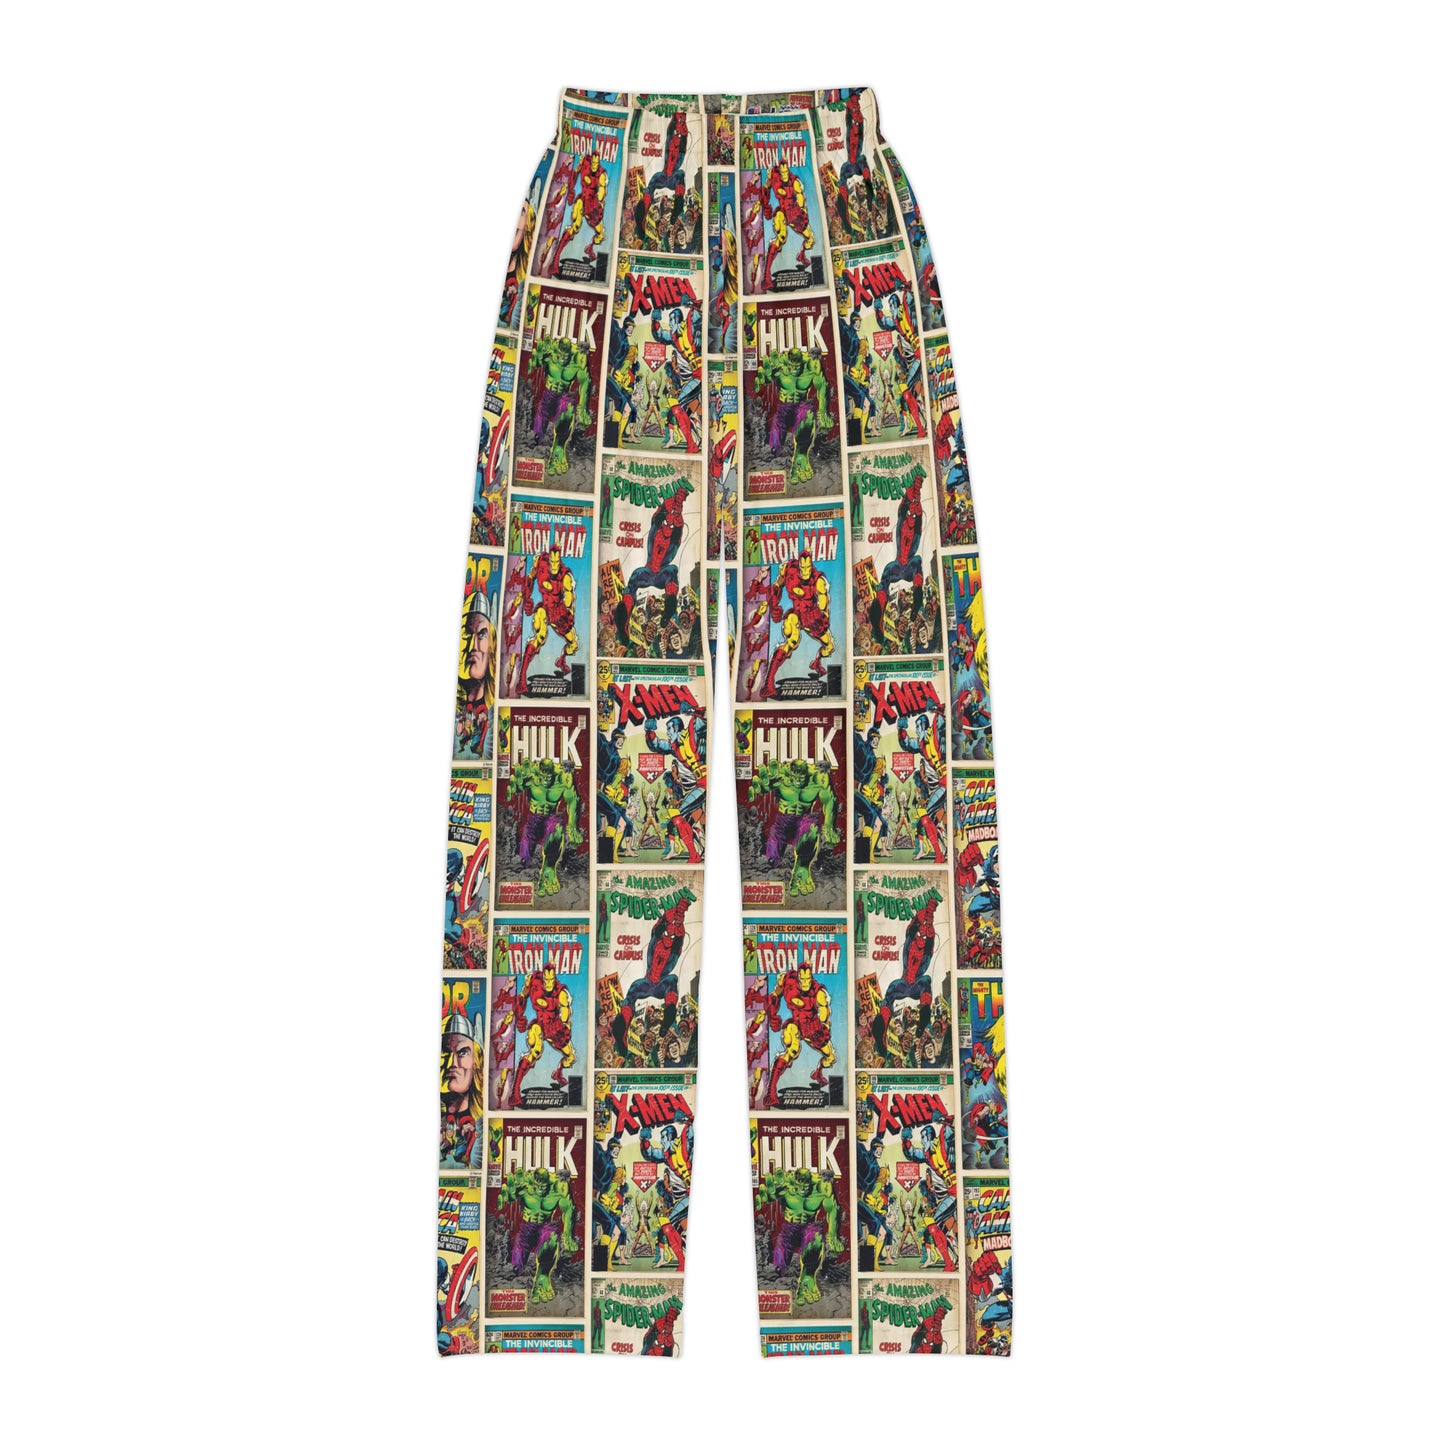 Marvel Comic Book Cover Collage Kids Pajama Pants